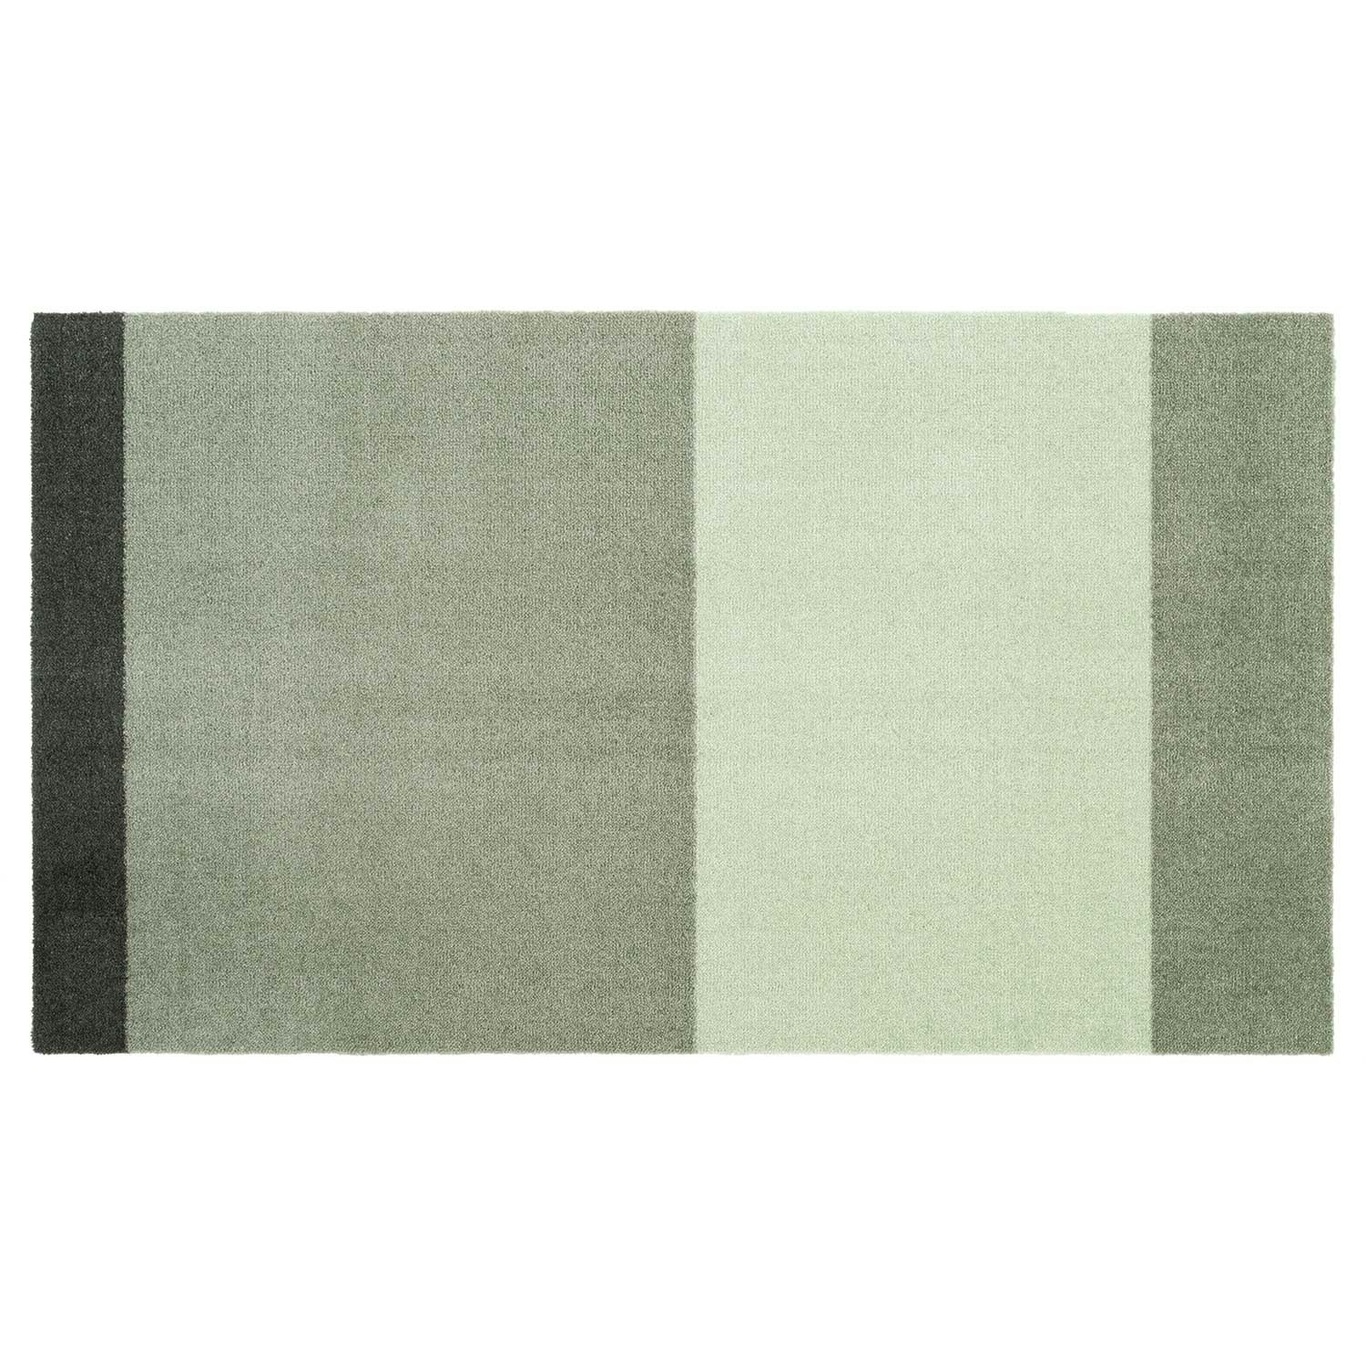 Stripes Rug Light Green / Dark Green, 67x120 cm